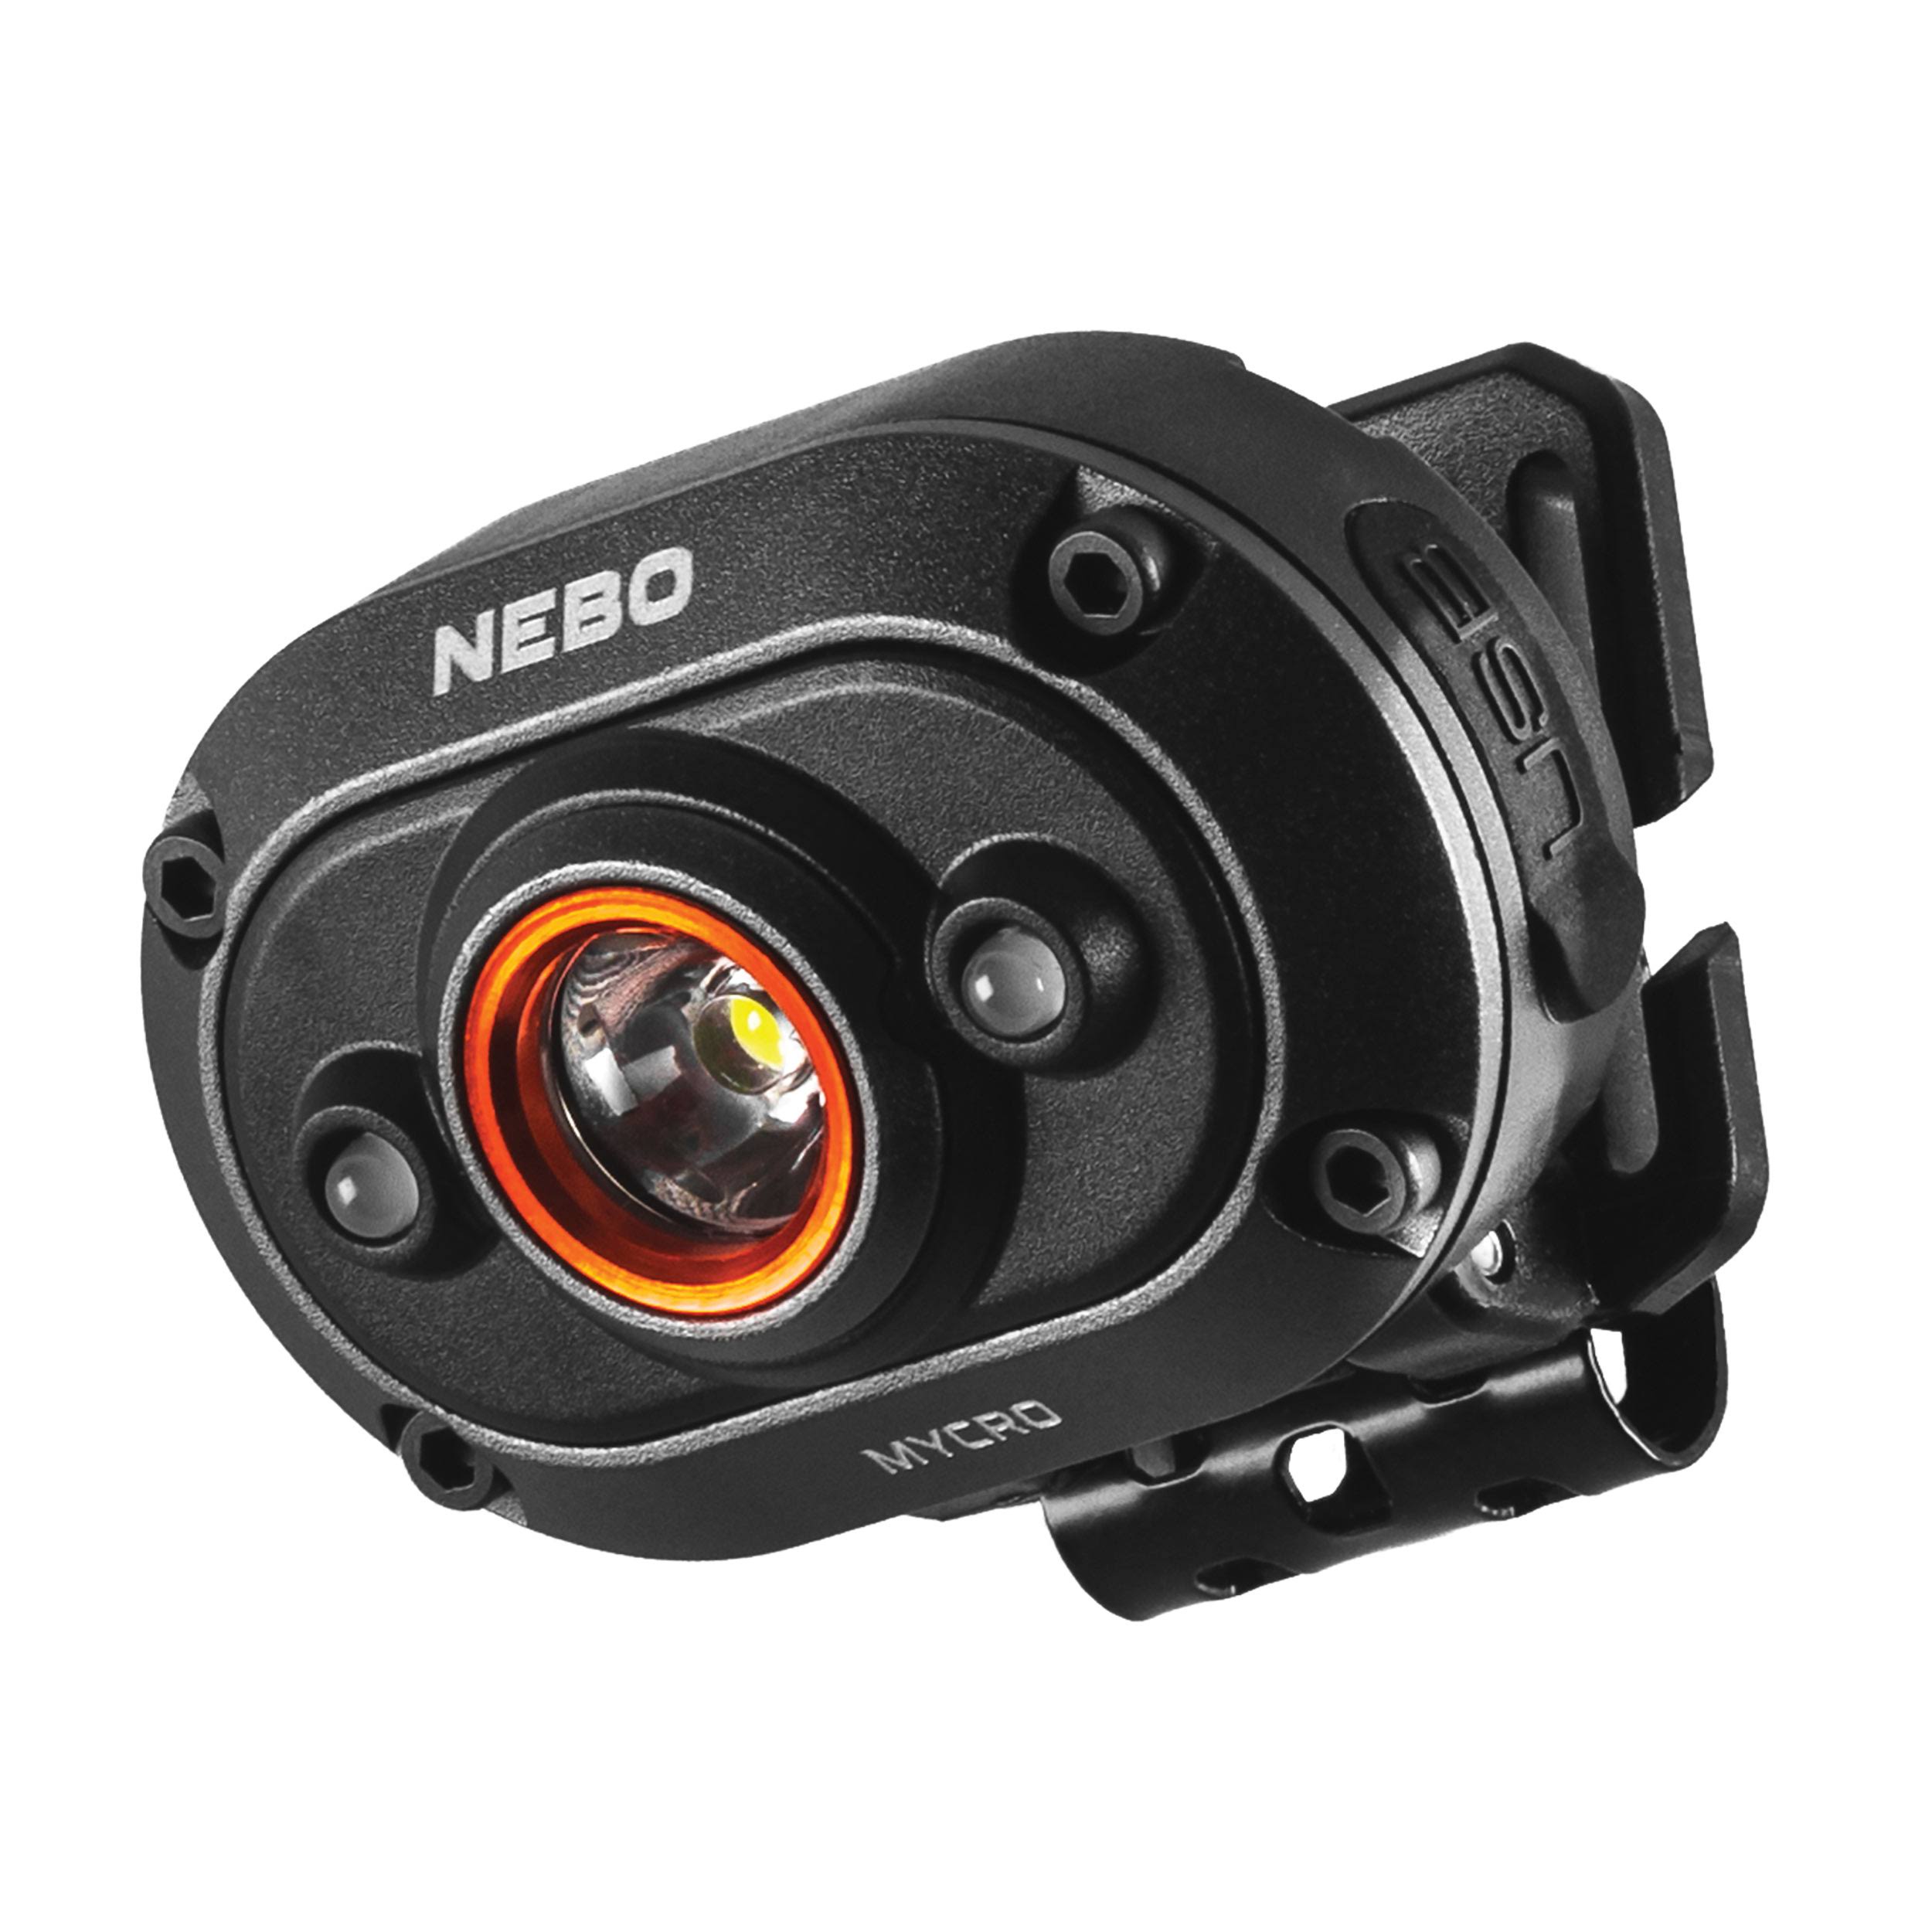 Nebo Unisex's NEB-HLP-0011 Mycro USB Rechargeable Headlamp Adjustable Cap Light With 400 Lumen Turbo Mode